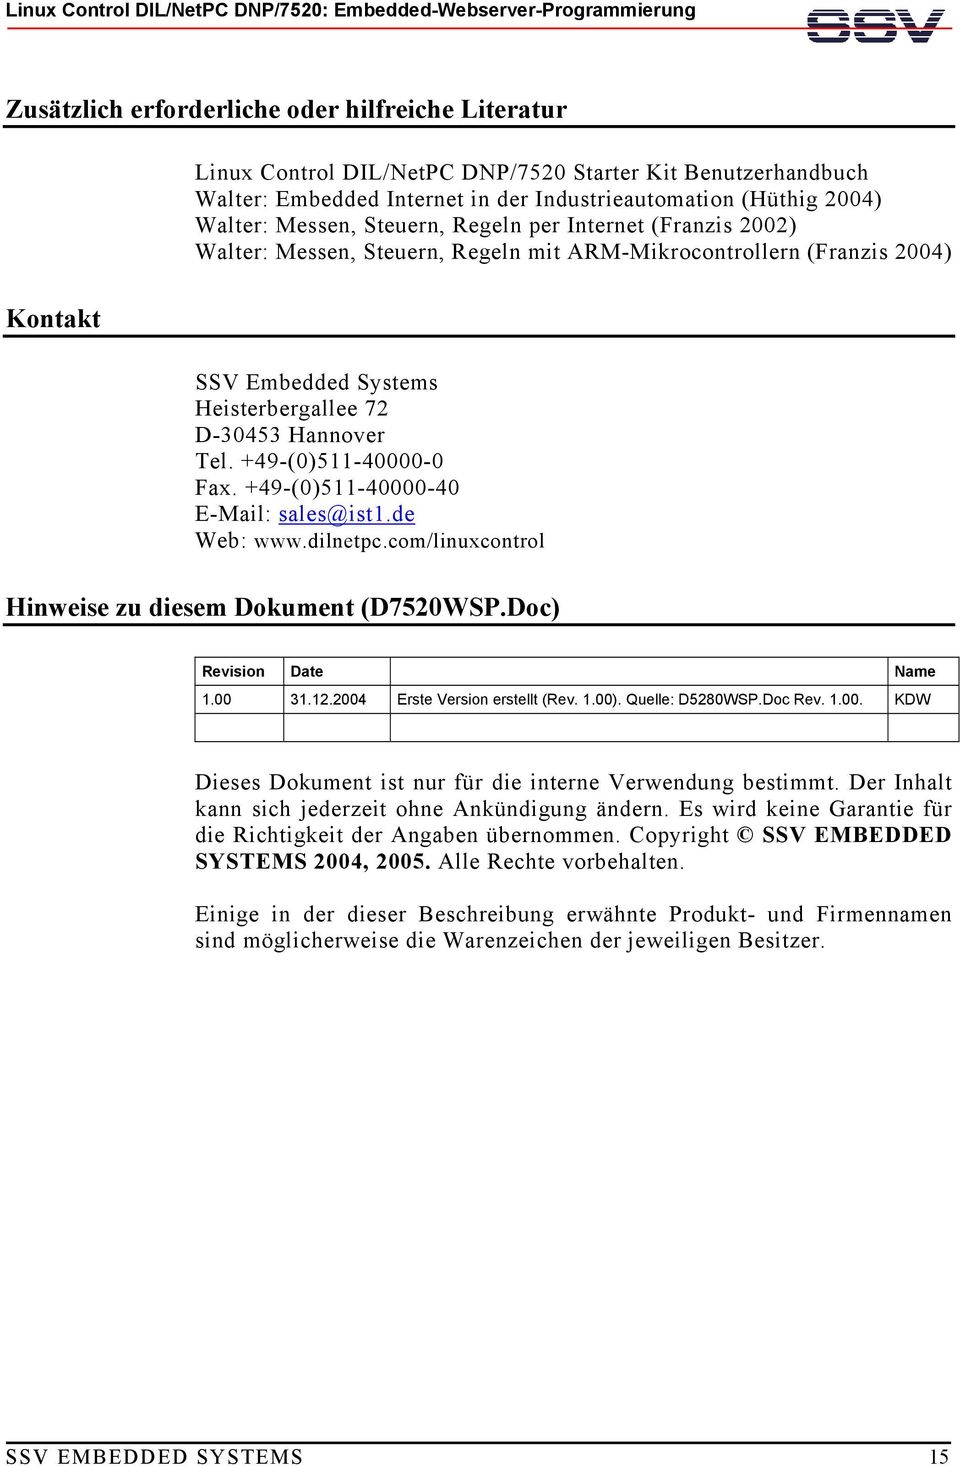 +49-(0)511-40000-0 Fax. +49-(0)511-40000-40 E-Mail: sales@ist1.de Web: www.dilnetpc.com/linuxcontrol Hinweise zu diesem Dokument (D7520WSP.Doc) Revision Date Name 1.00 31.12.